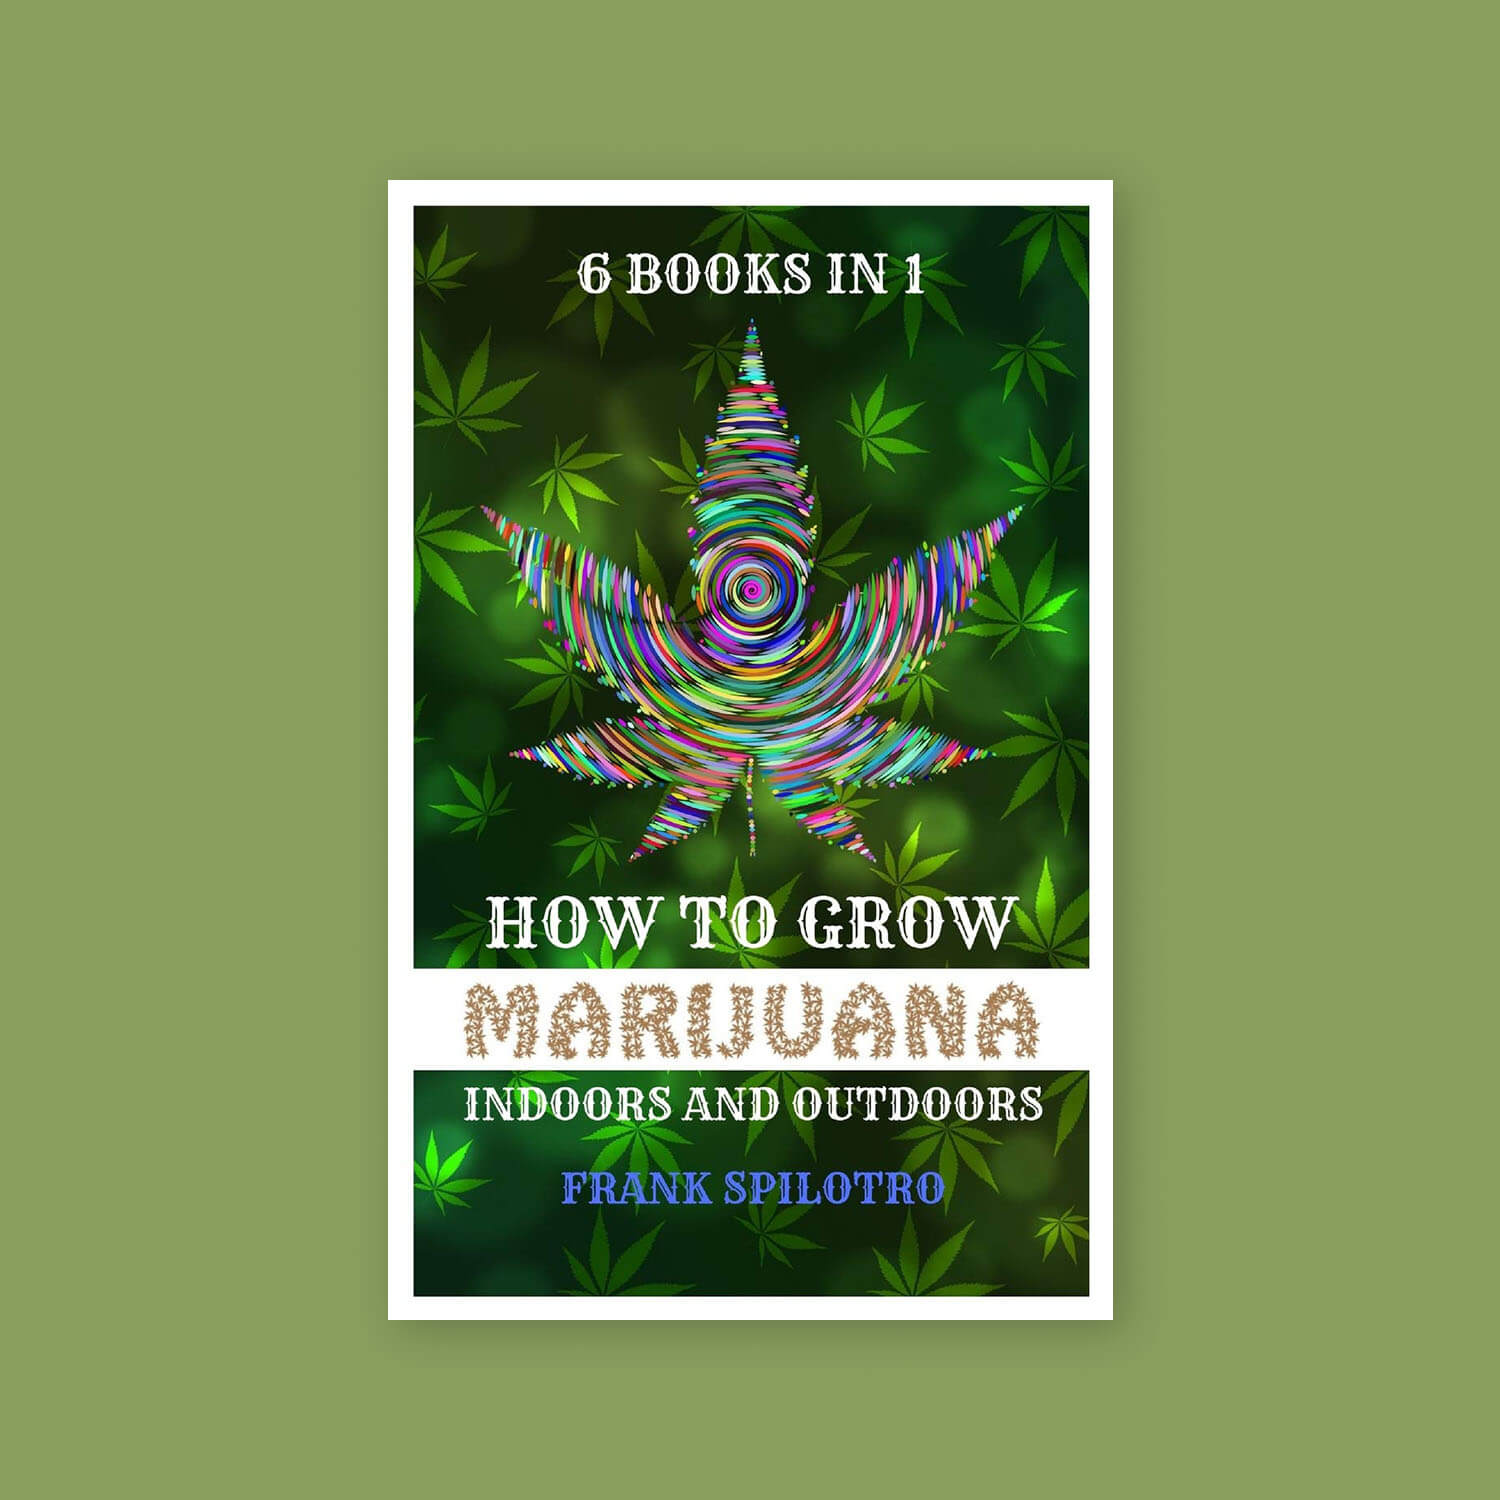 How to grow marijuana indoors - Goldleaf bookshelf